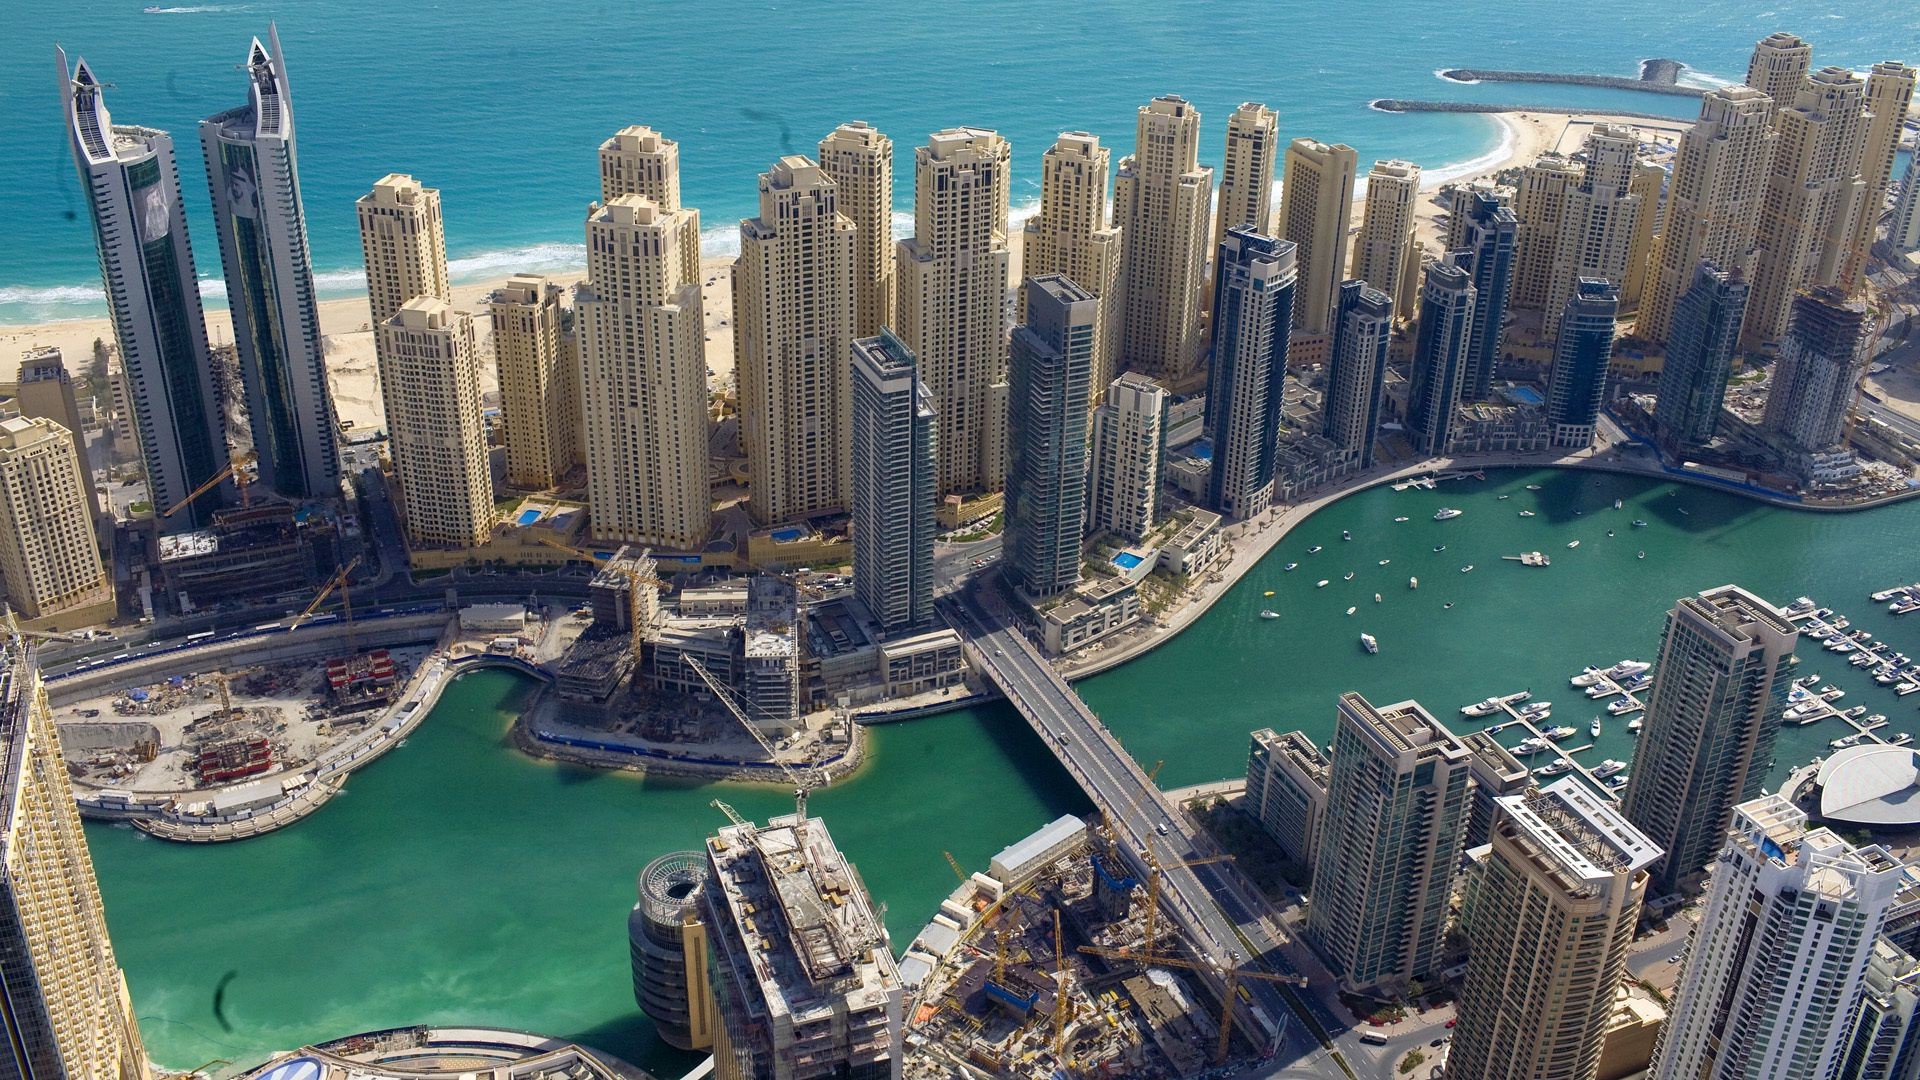 Dubai uae UAE Dubai coast sea skyscrapers buildings - Android wallpapers